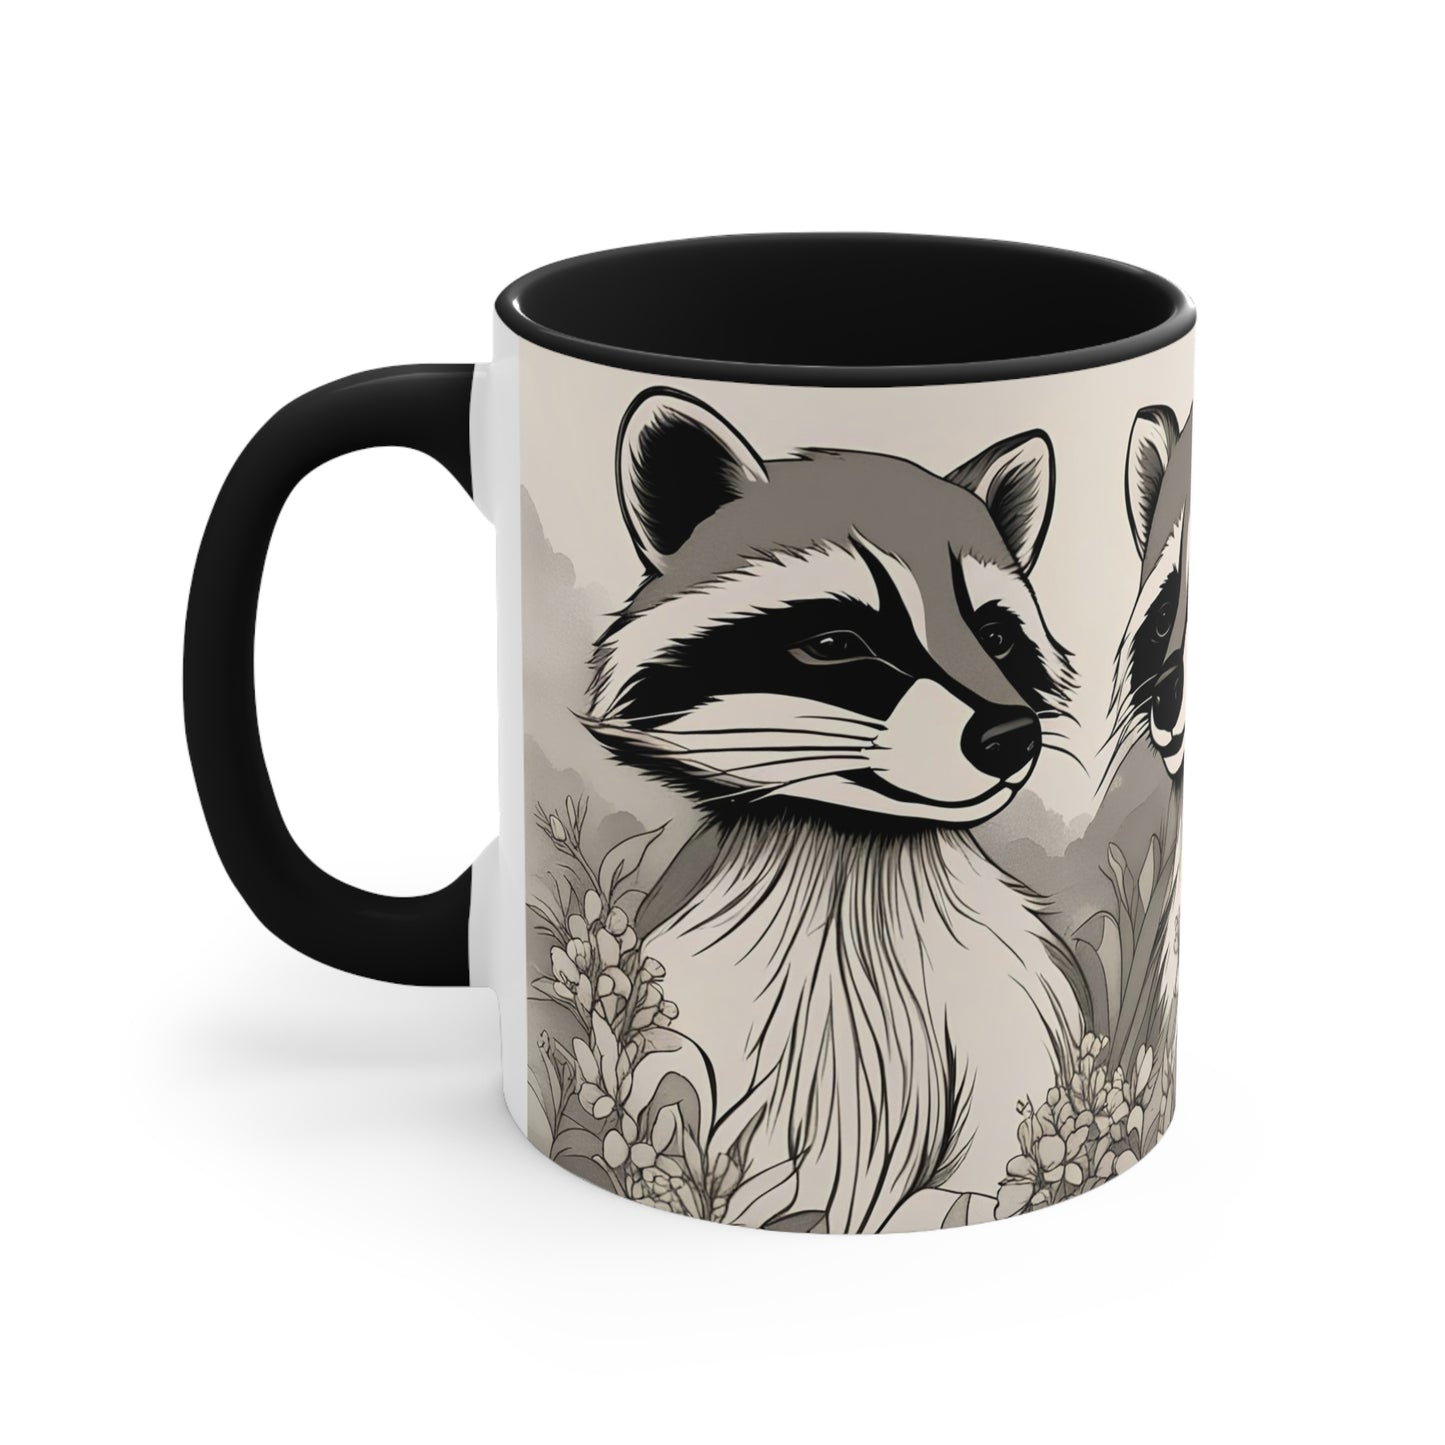 Three Raccoons, Ceramic Mug - Perfect for Coffee, Tea, and More!